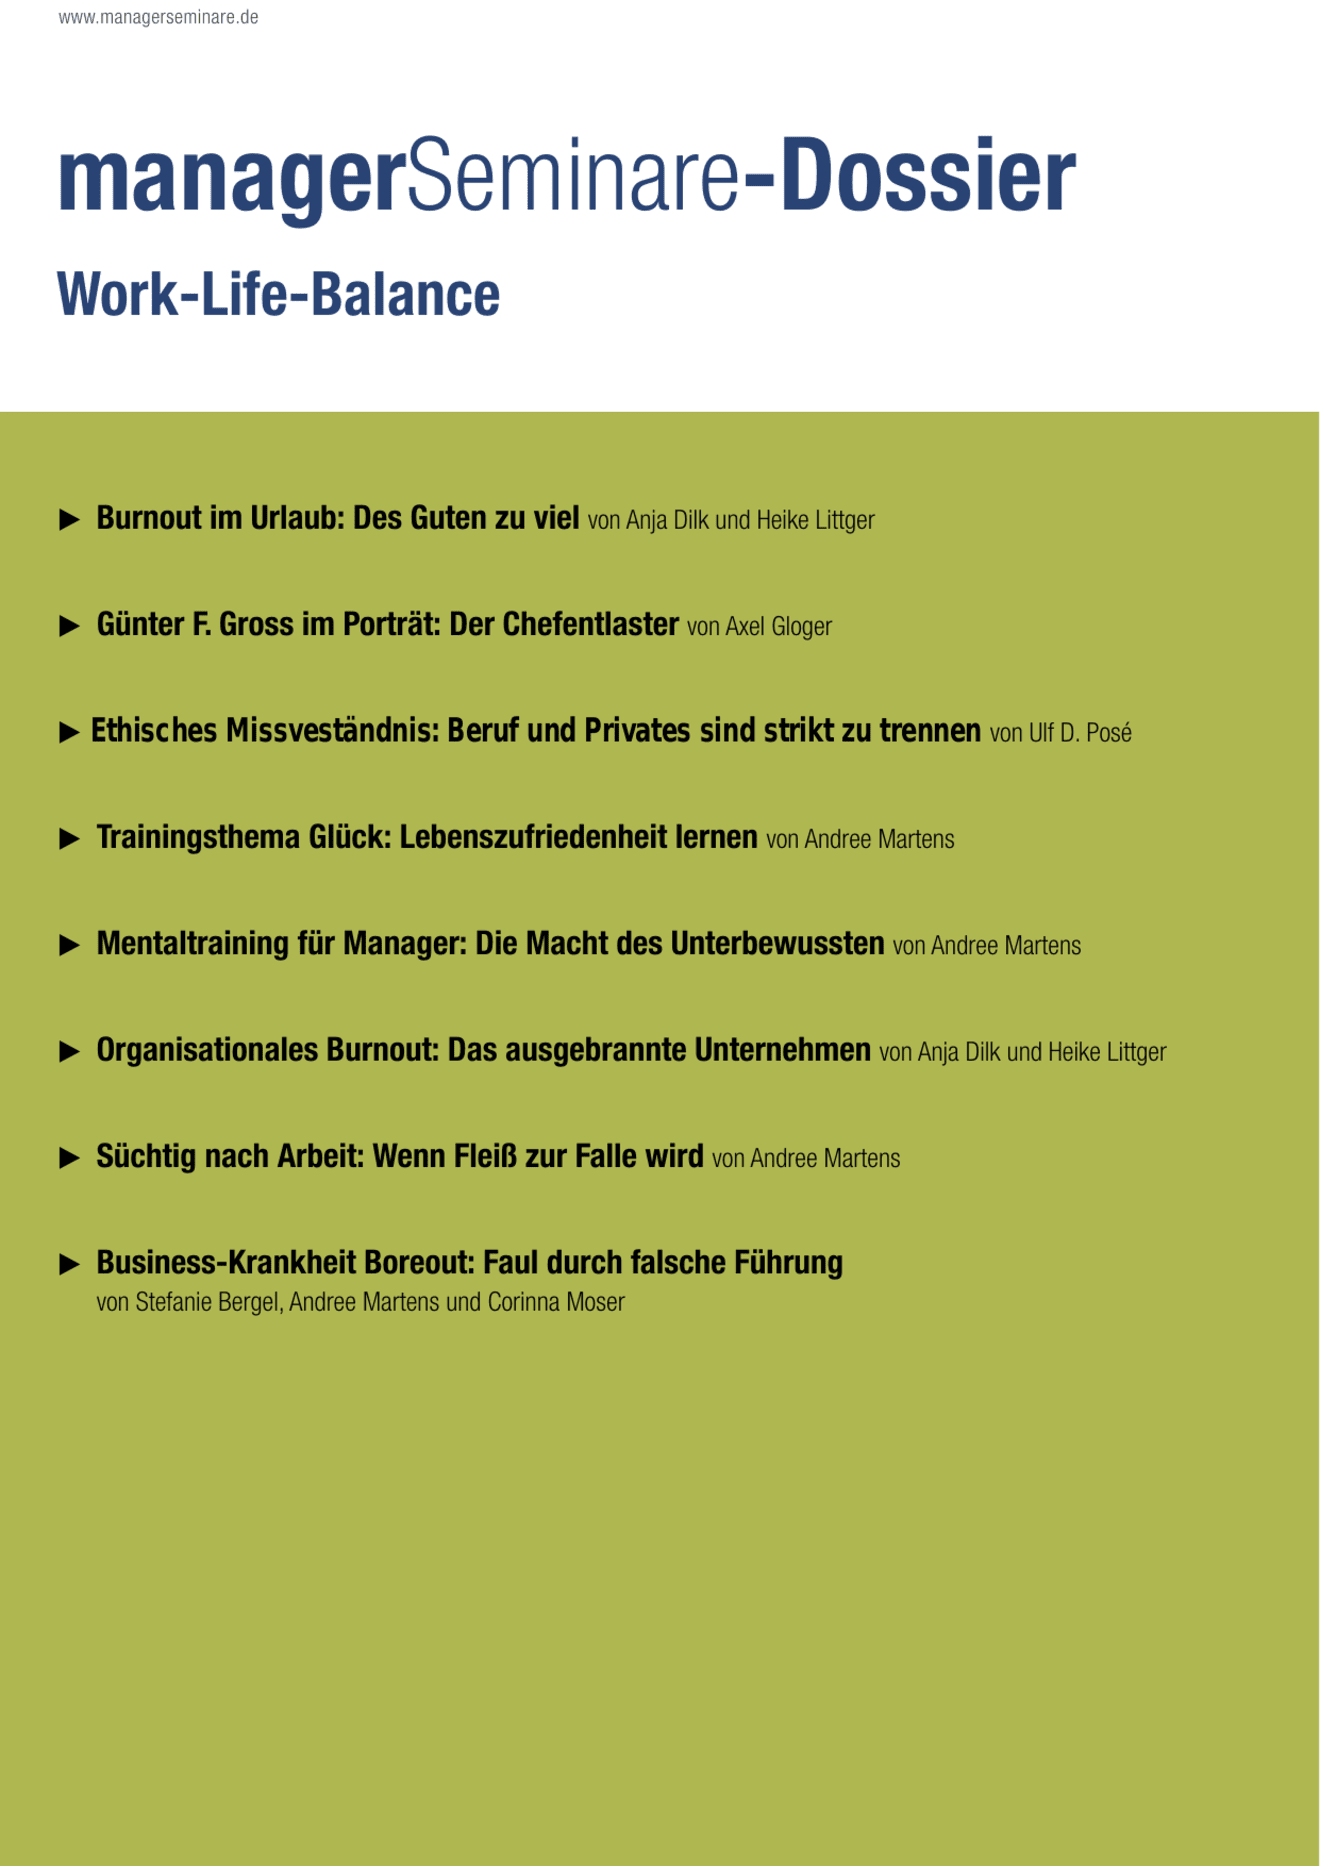 Dossier Work-Life-Balance